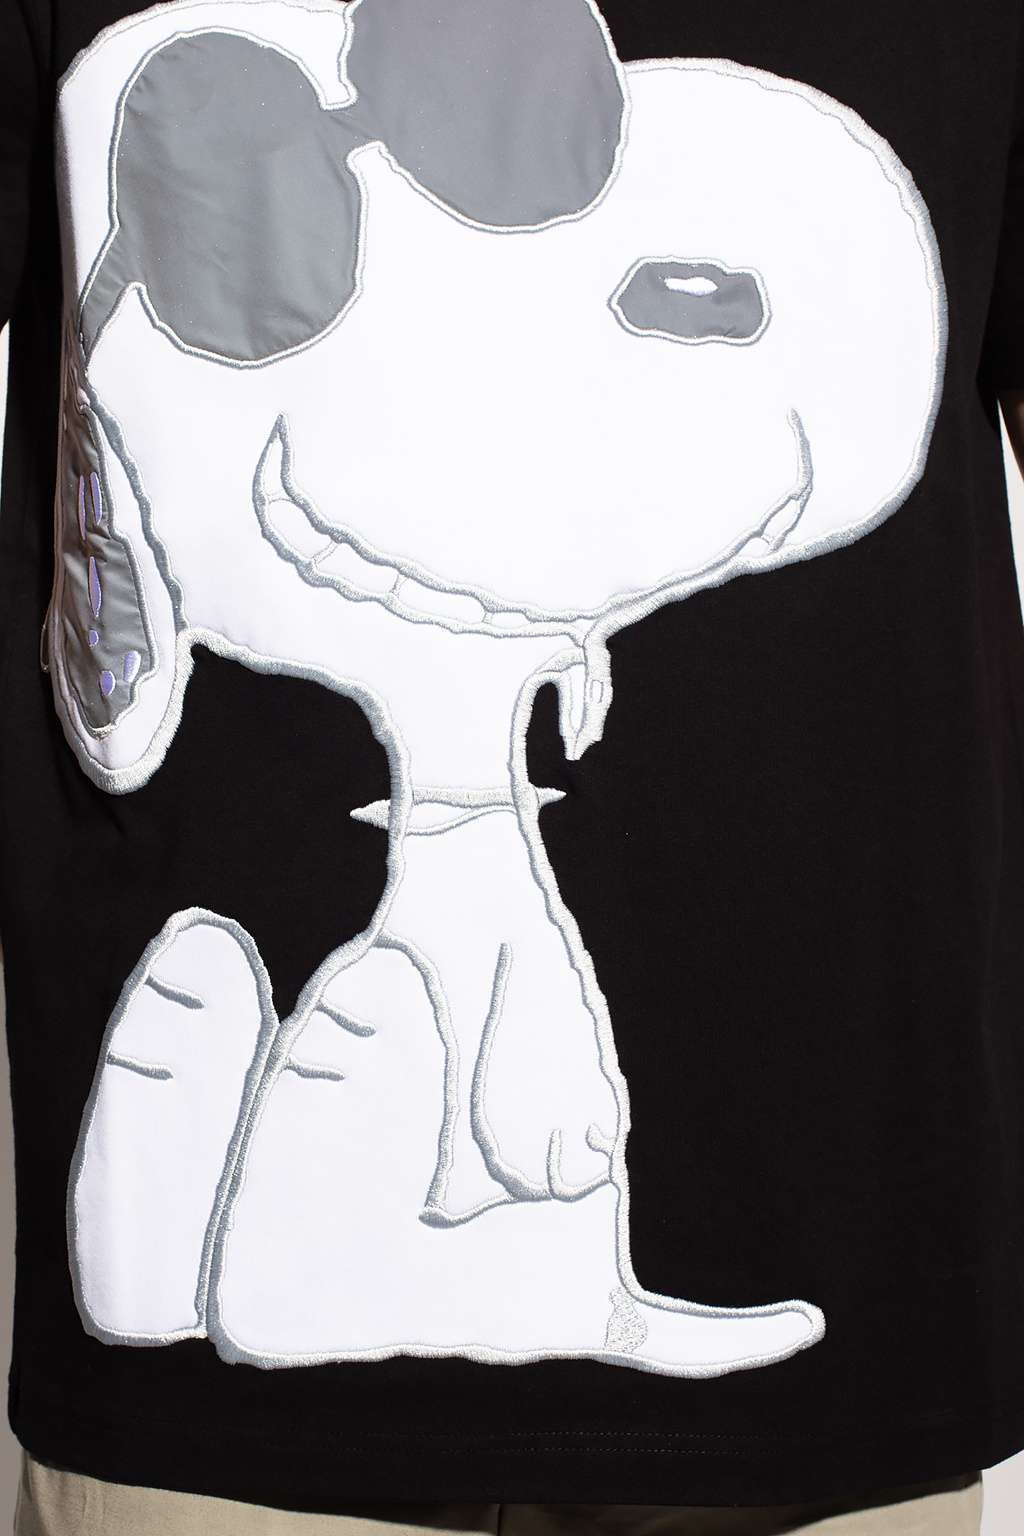 Iceberg Snoopy T-shirt